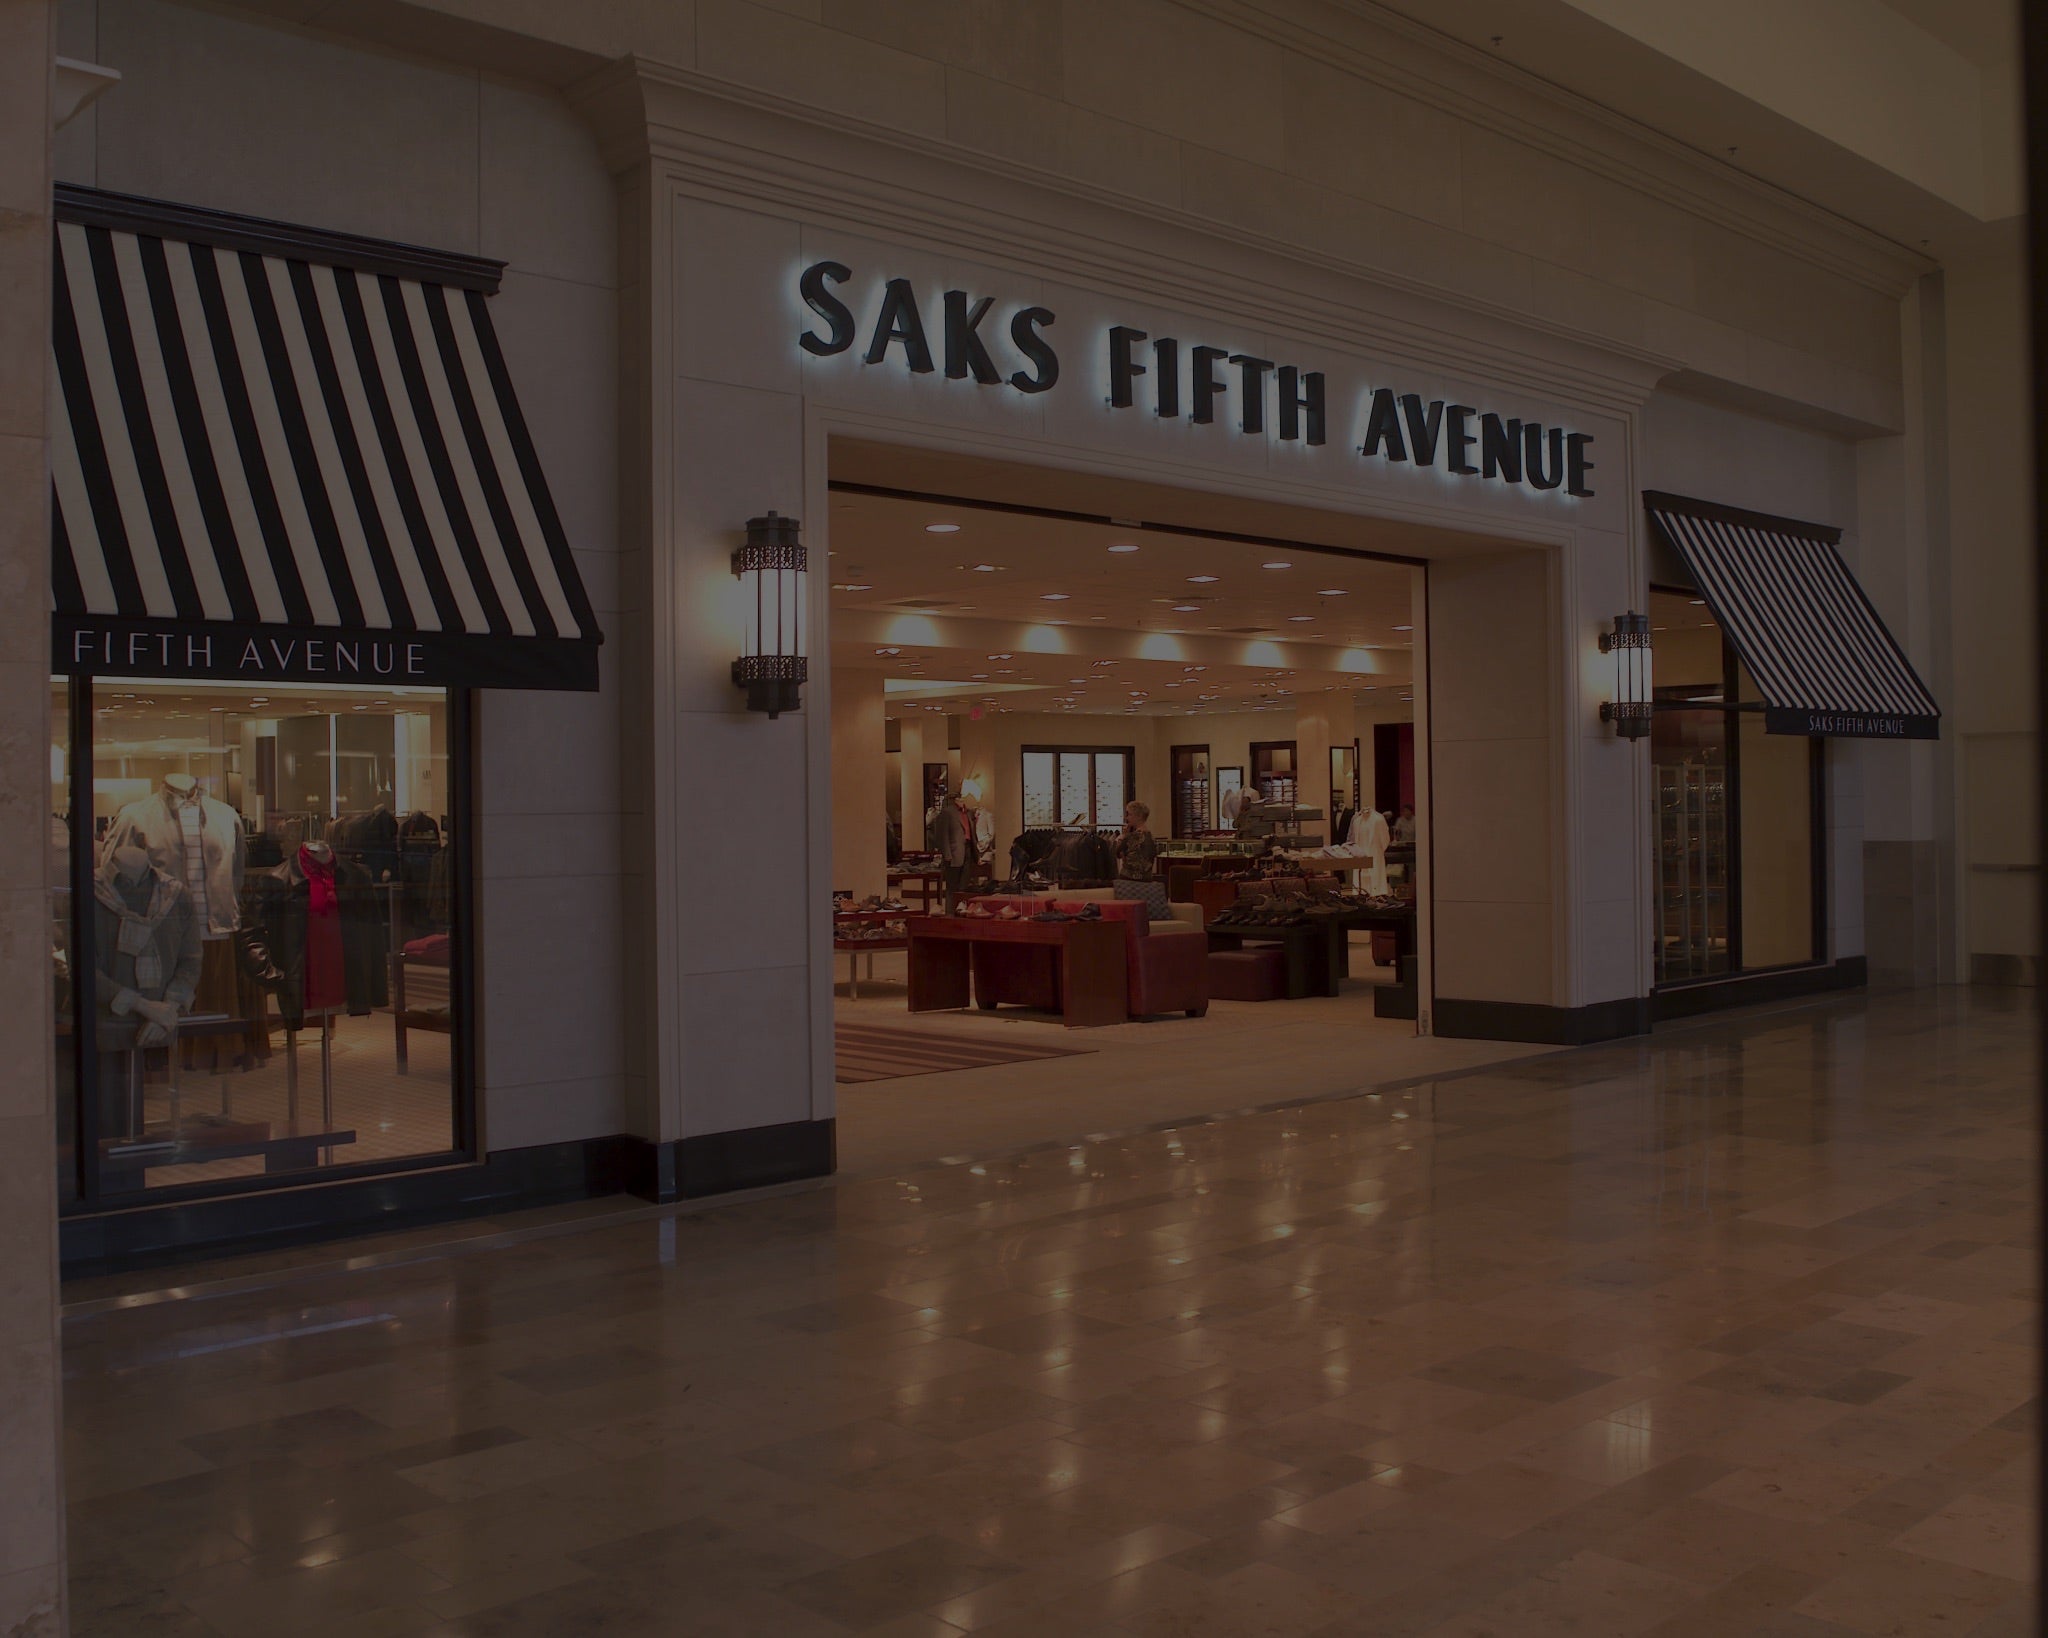 San Antonio, Texas - April 18, 2018: Saks Fifth Avenue retail store